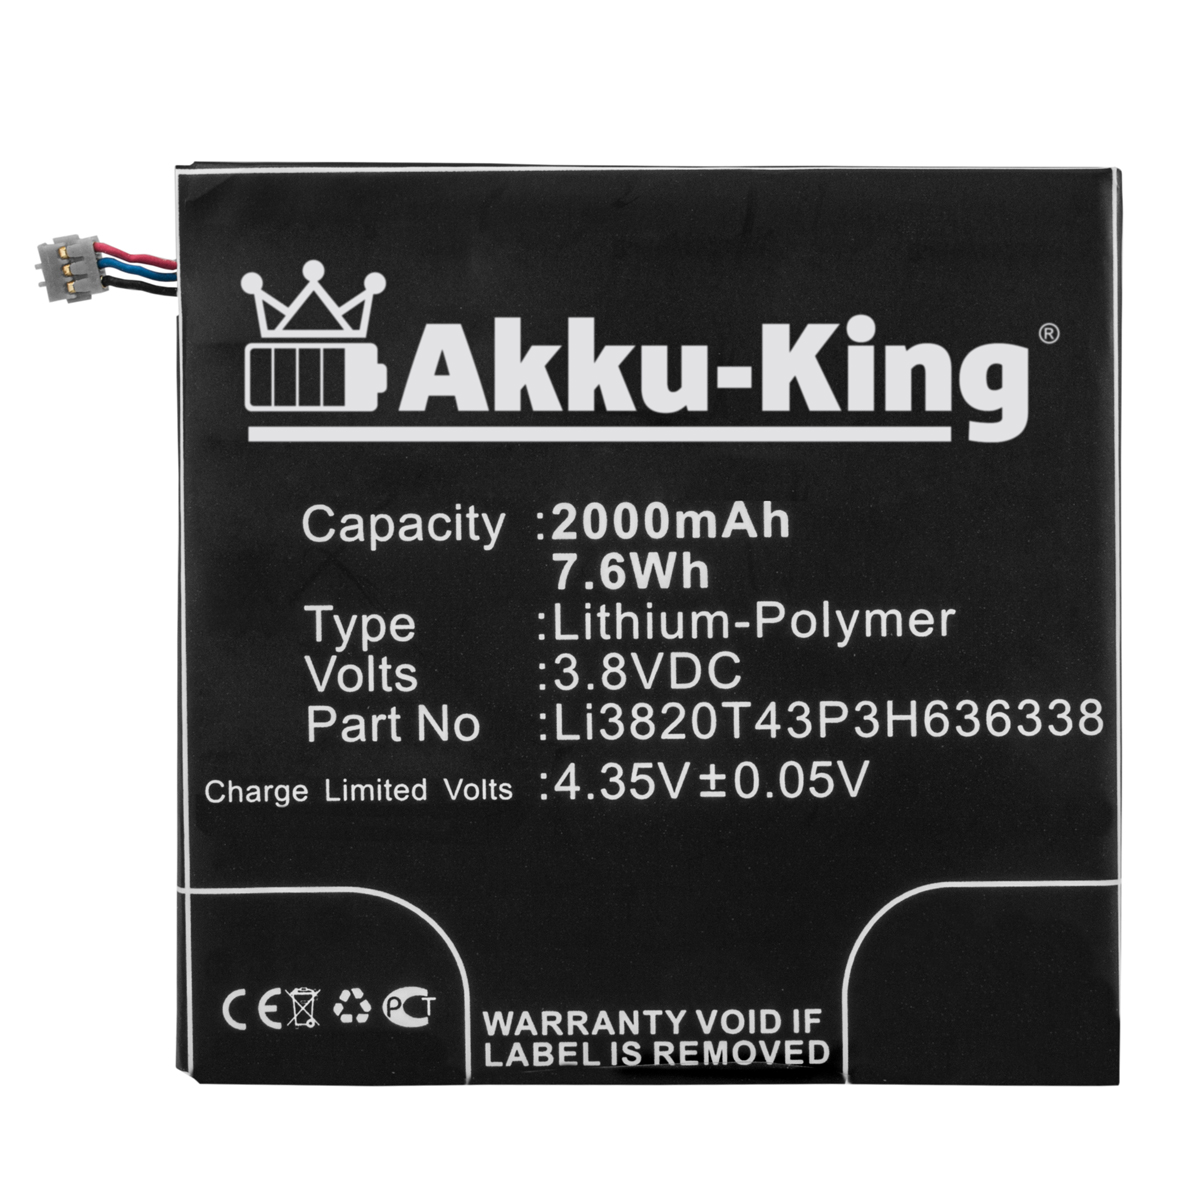 mit 2000mAh Akku kompatibel Handy-Akku, ZTELi3820T43P3H636338 AKKU-KING Volt, Li-Polymer 3.8